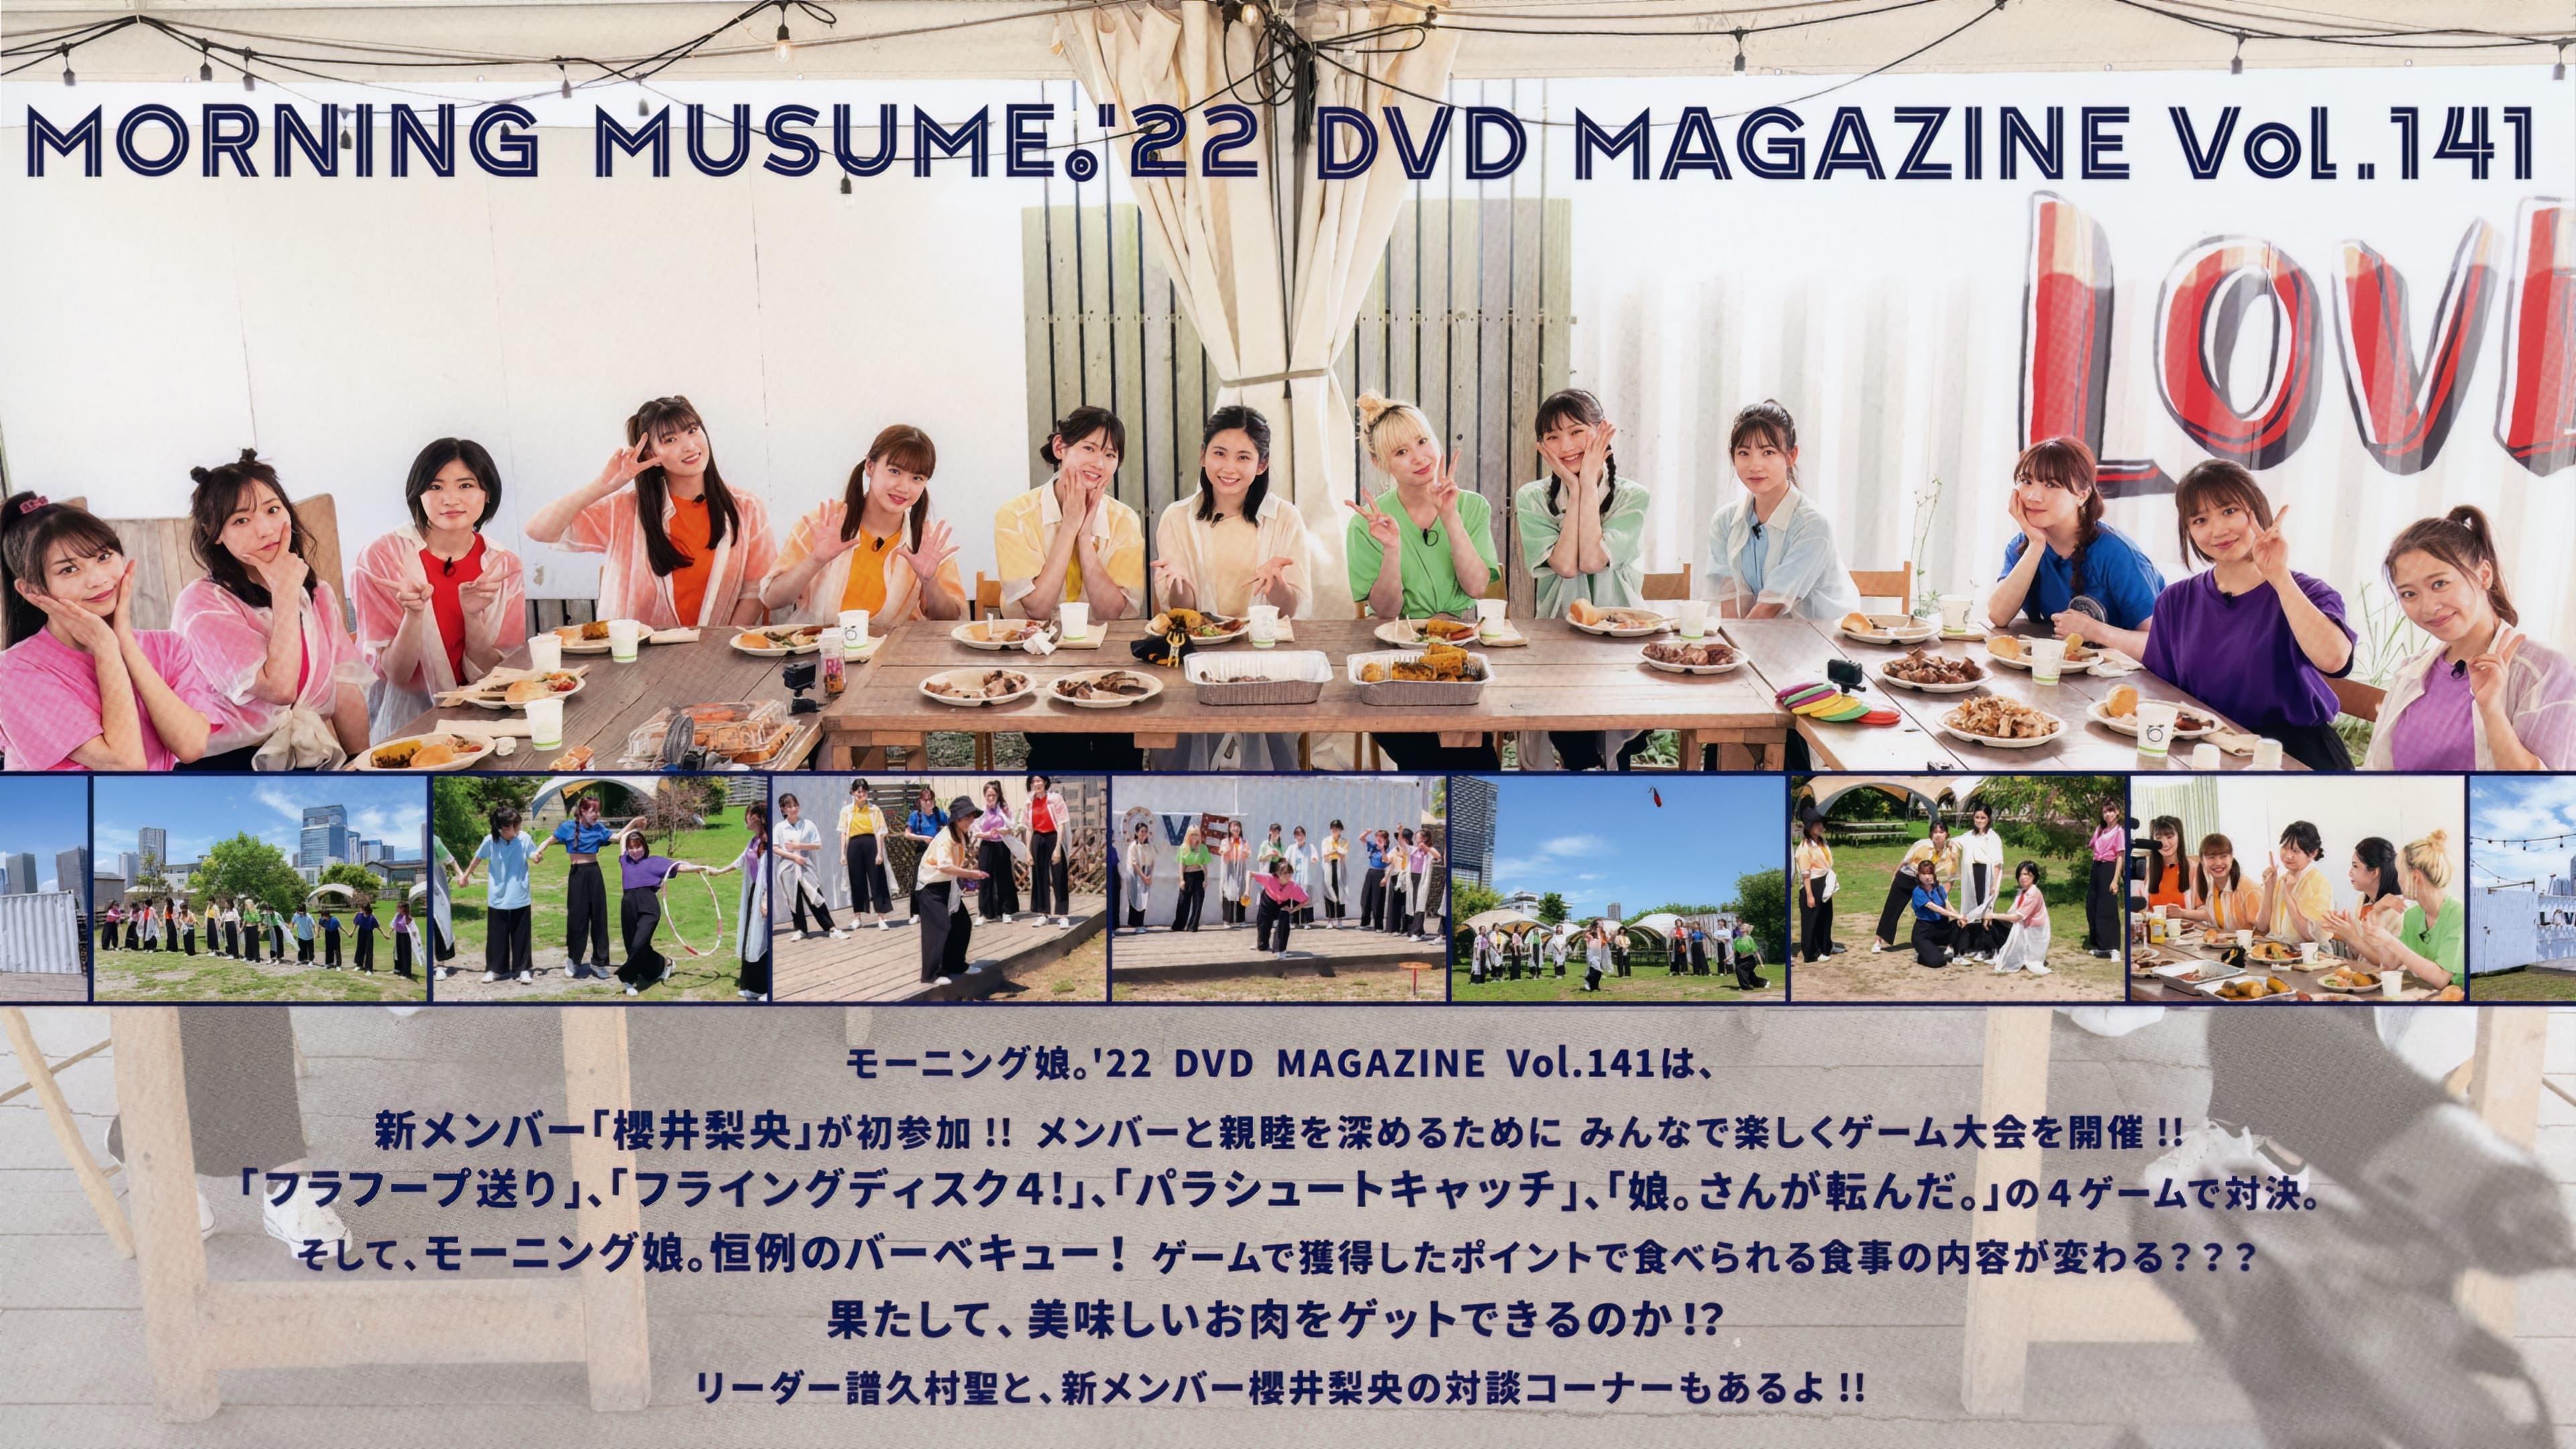 Morning Musume.'22 DVD Magazine Vol.141 backdrop